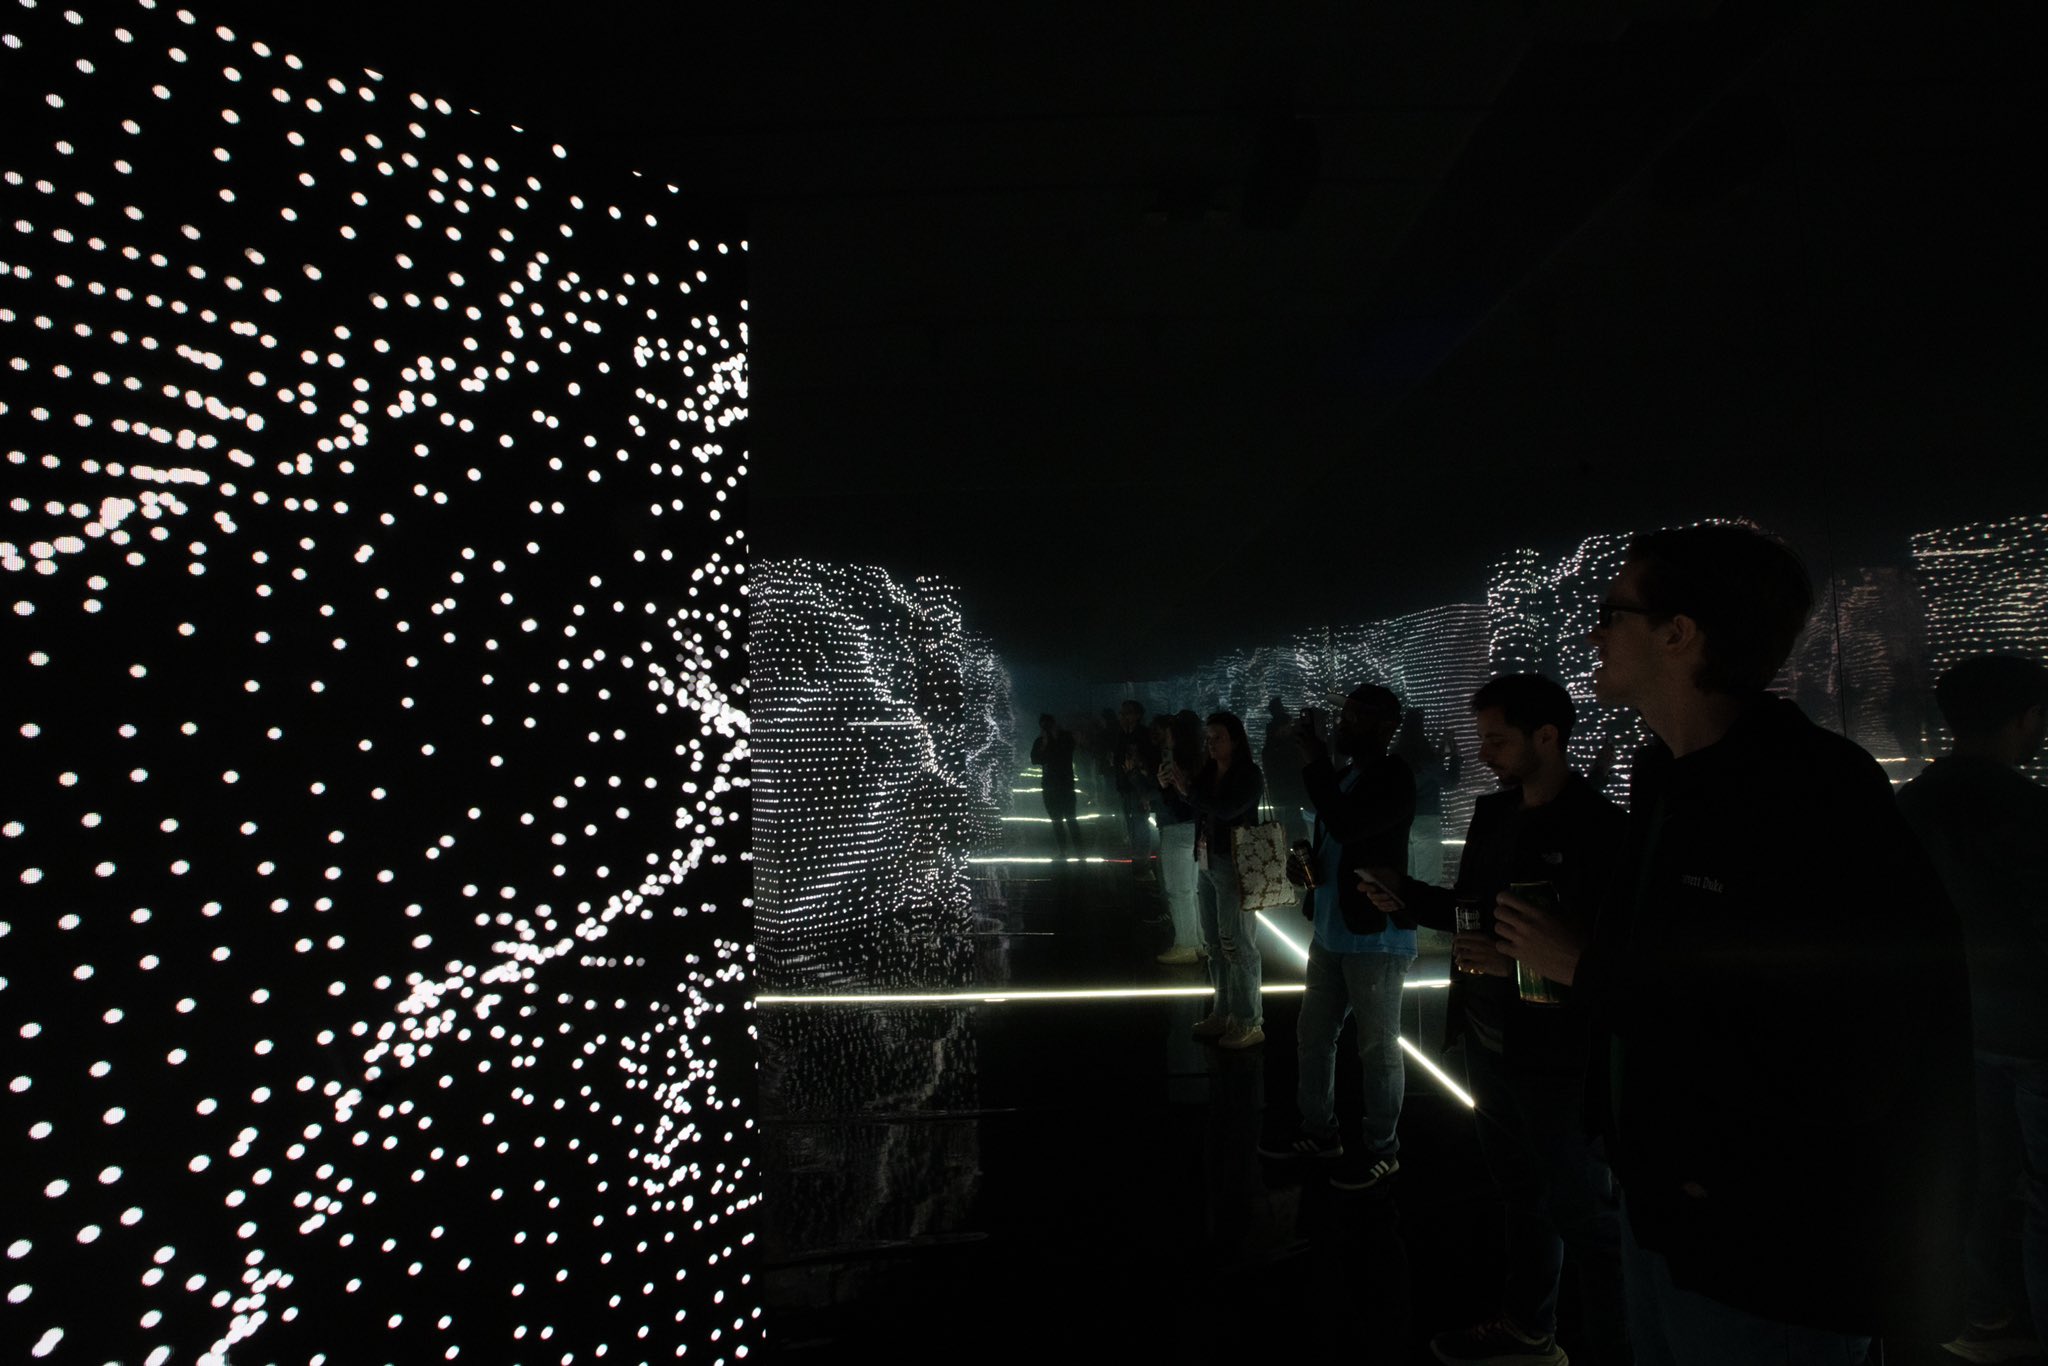 interactive art installation, dark infinity mirror room with multiple people walking around